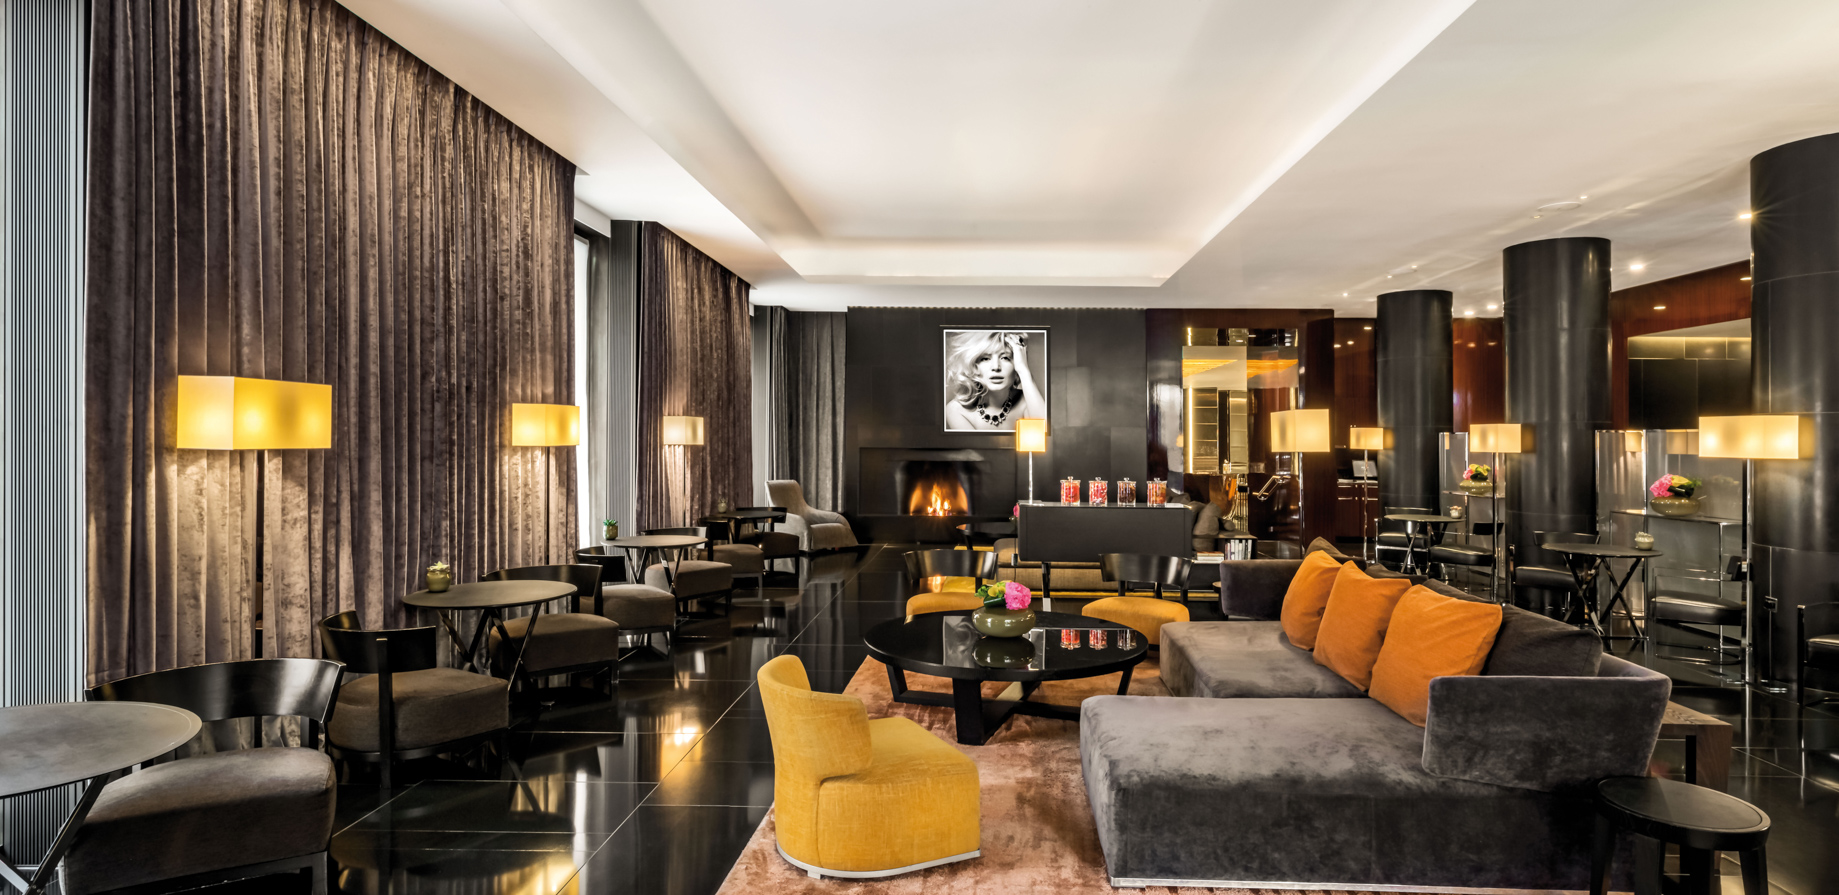 Bvlgari Hotel London – Knightsbridge, London, UK – The Lounge